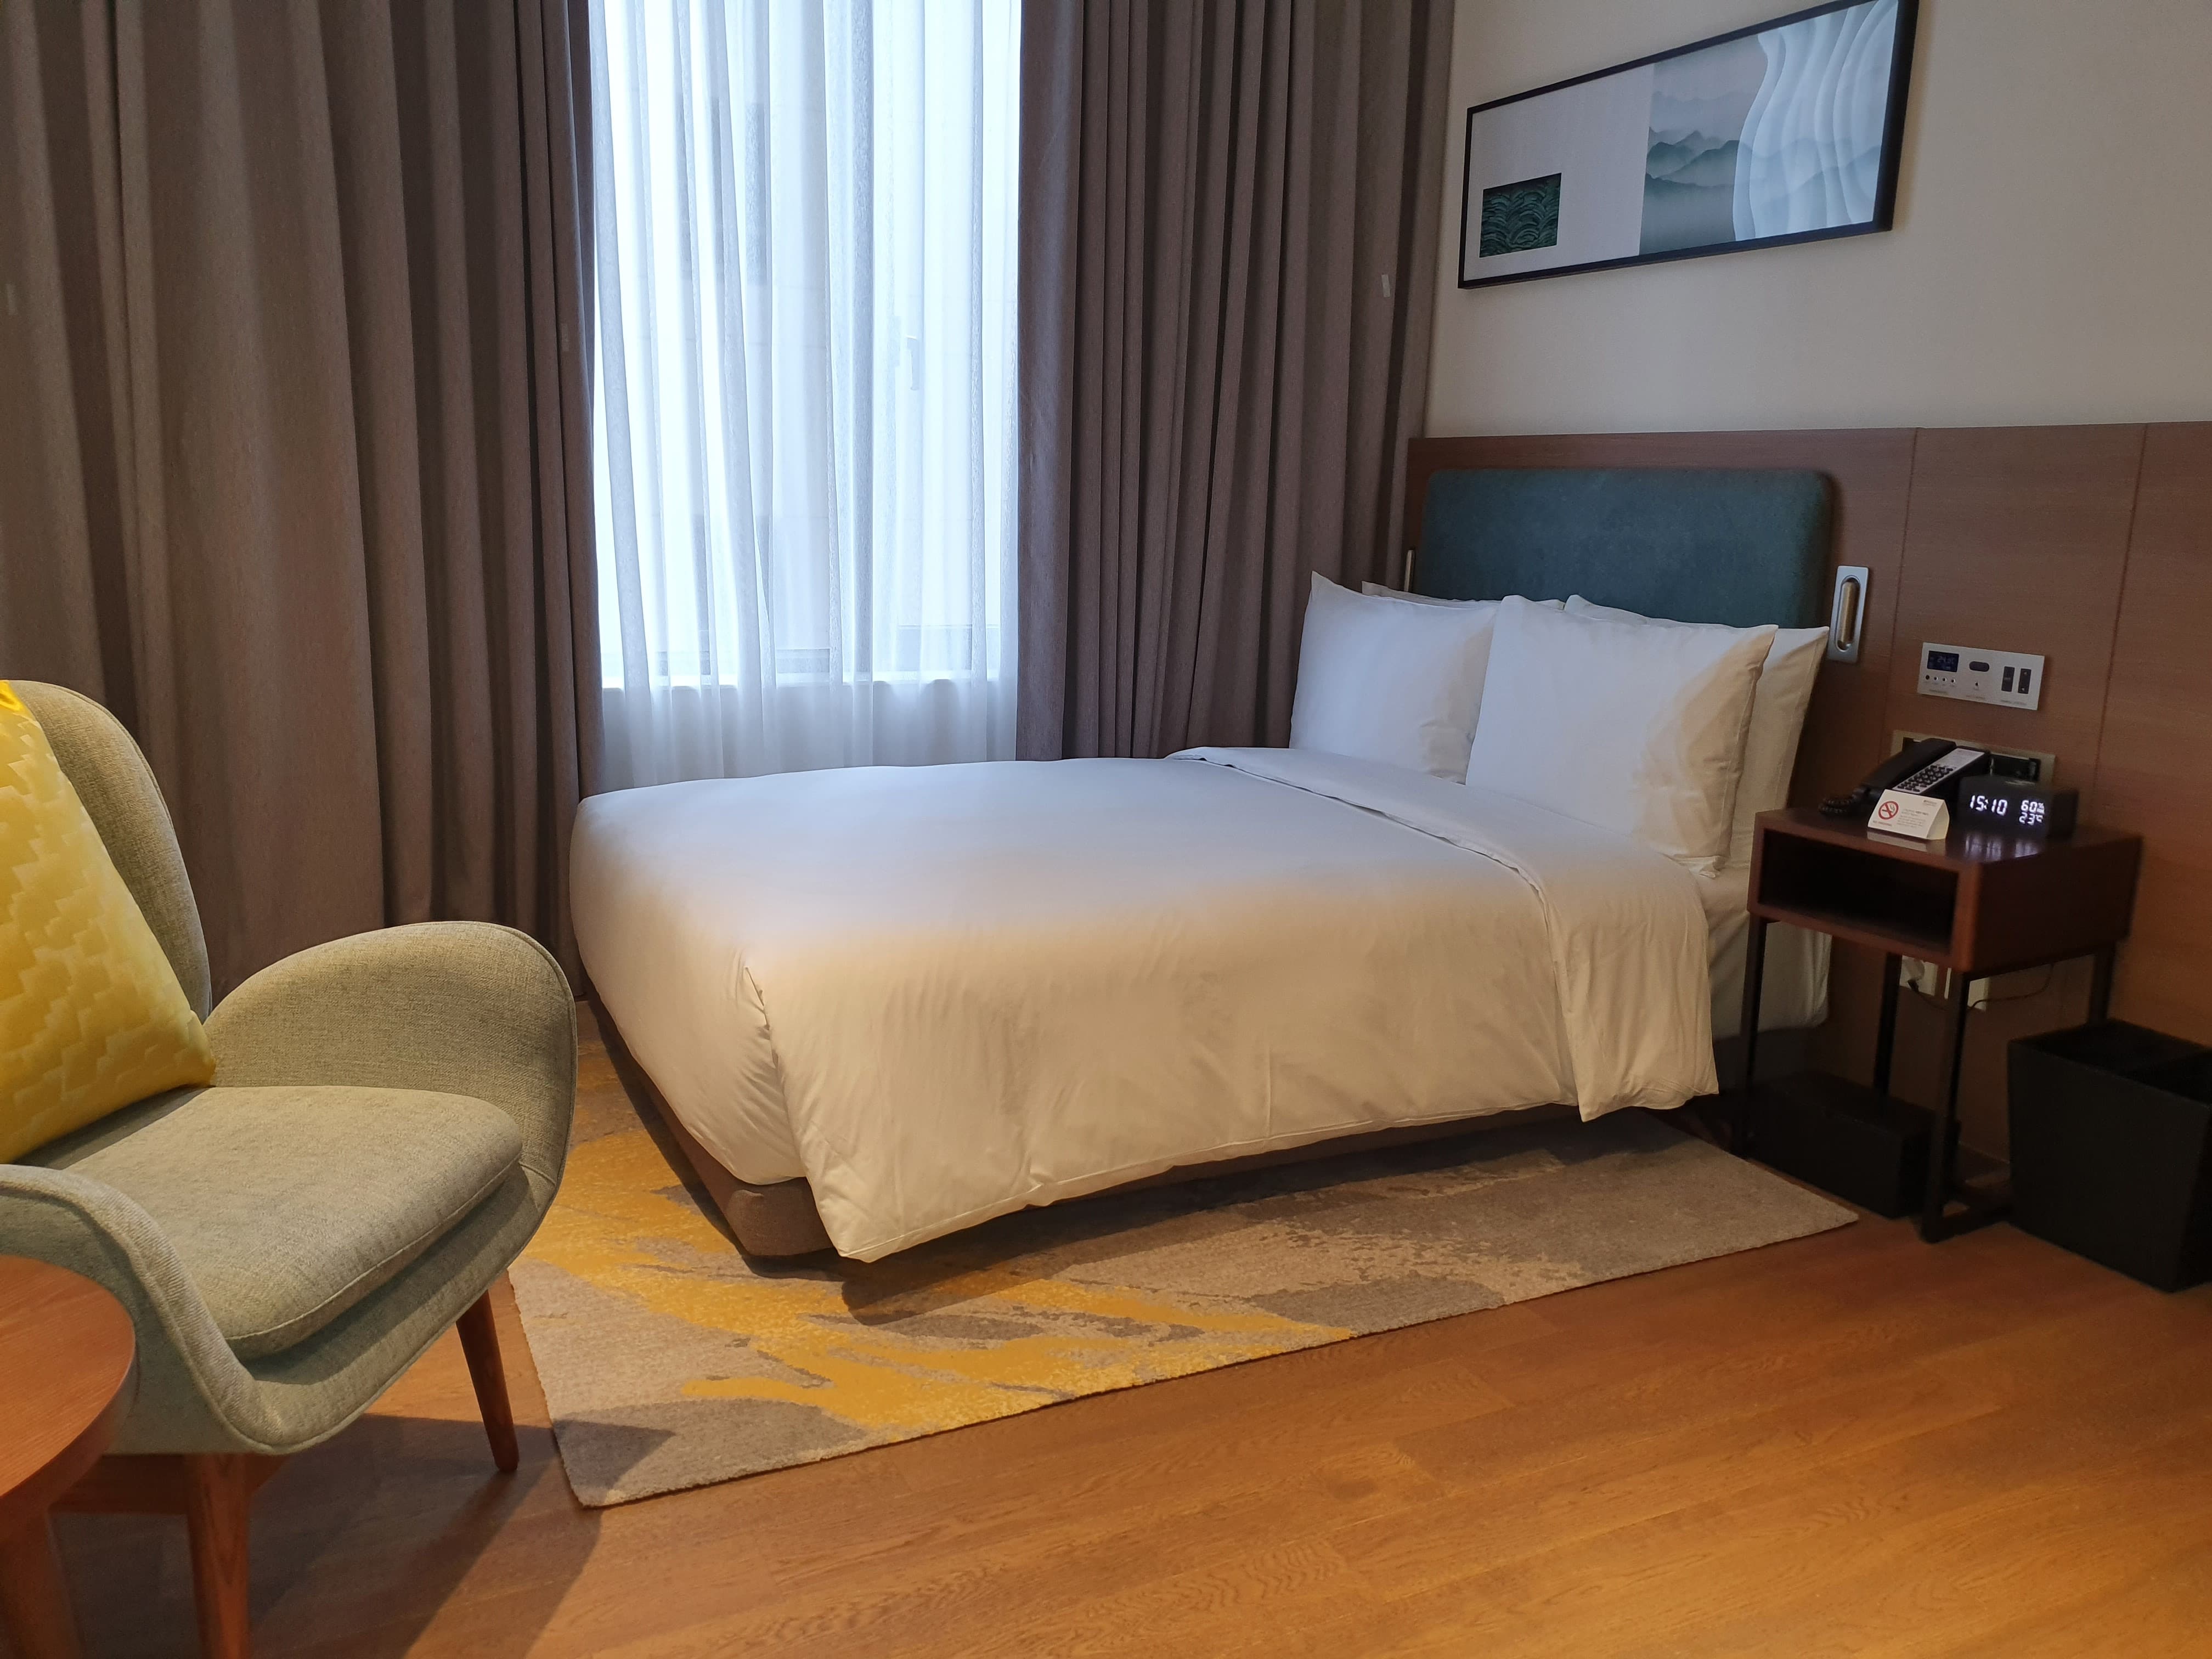 Hilton Garden Inn Seoul Gangnam	5 : Cozy hotel romm with a bed and a single sofa